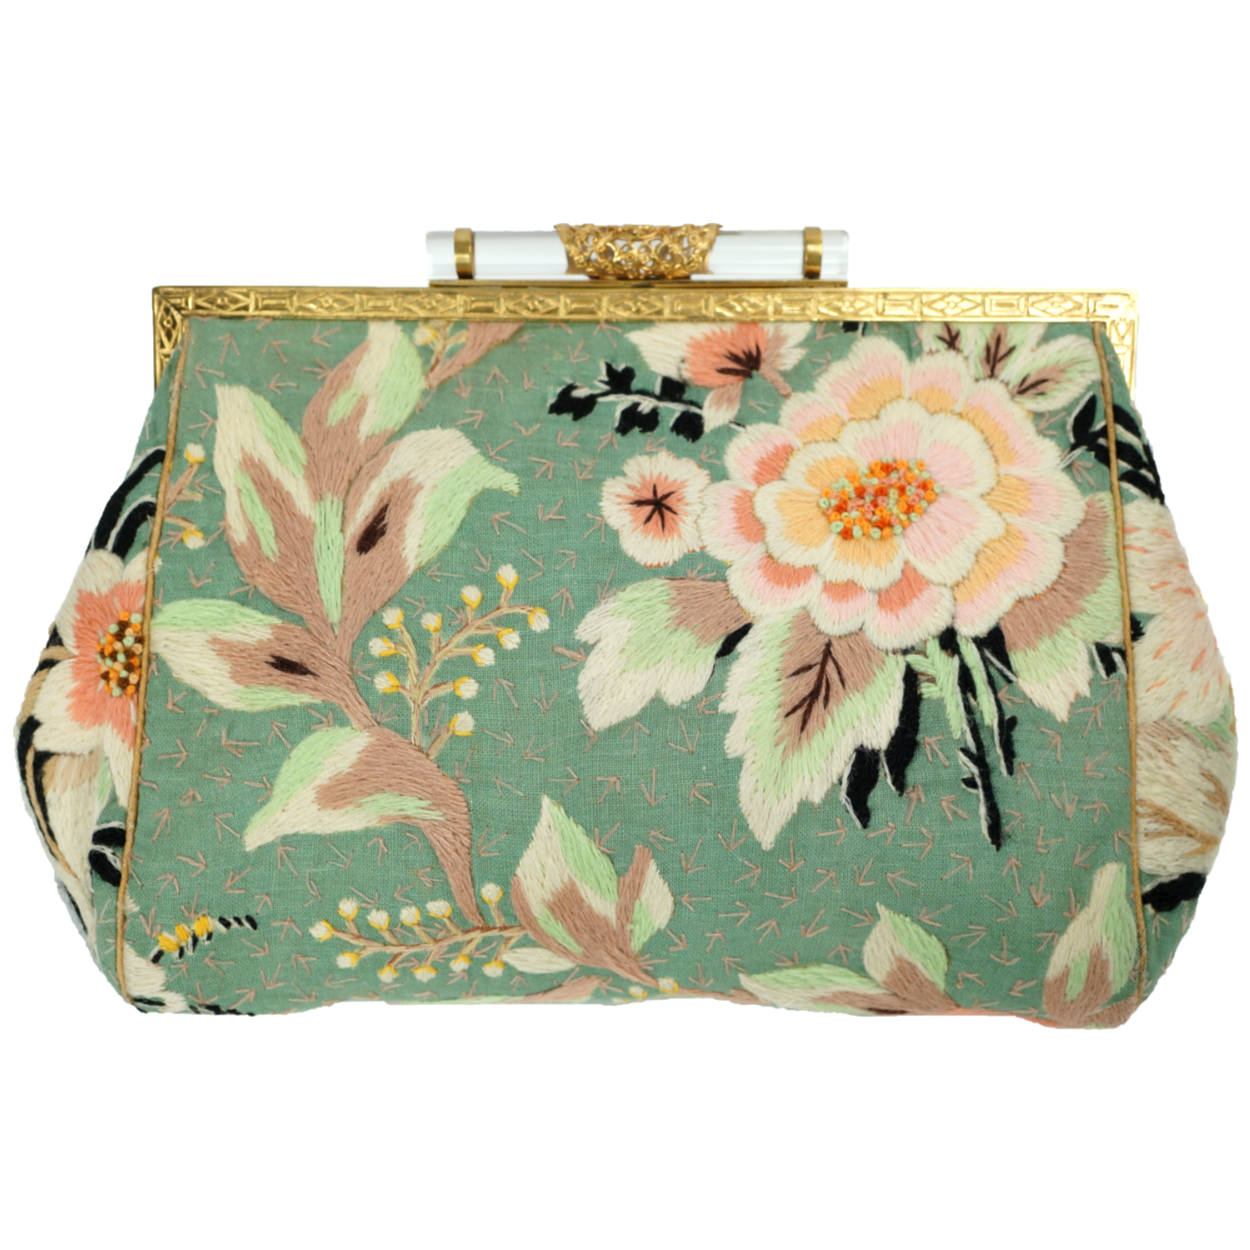 Vintage 1930s Clutch Purse Floral Embroidery Ed B Robinson Handbag